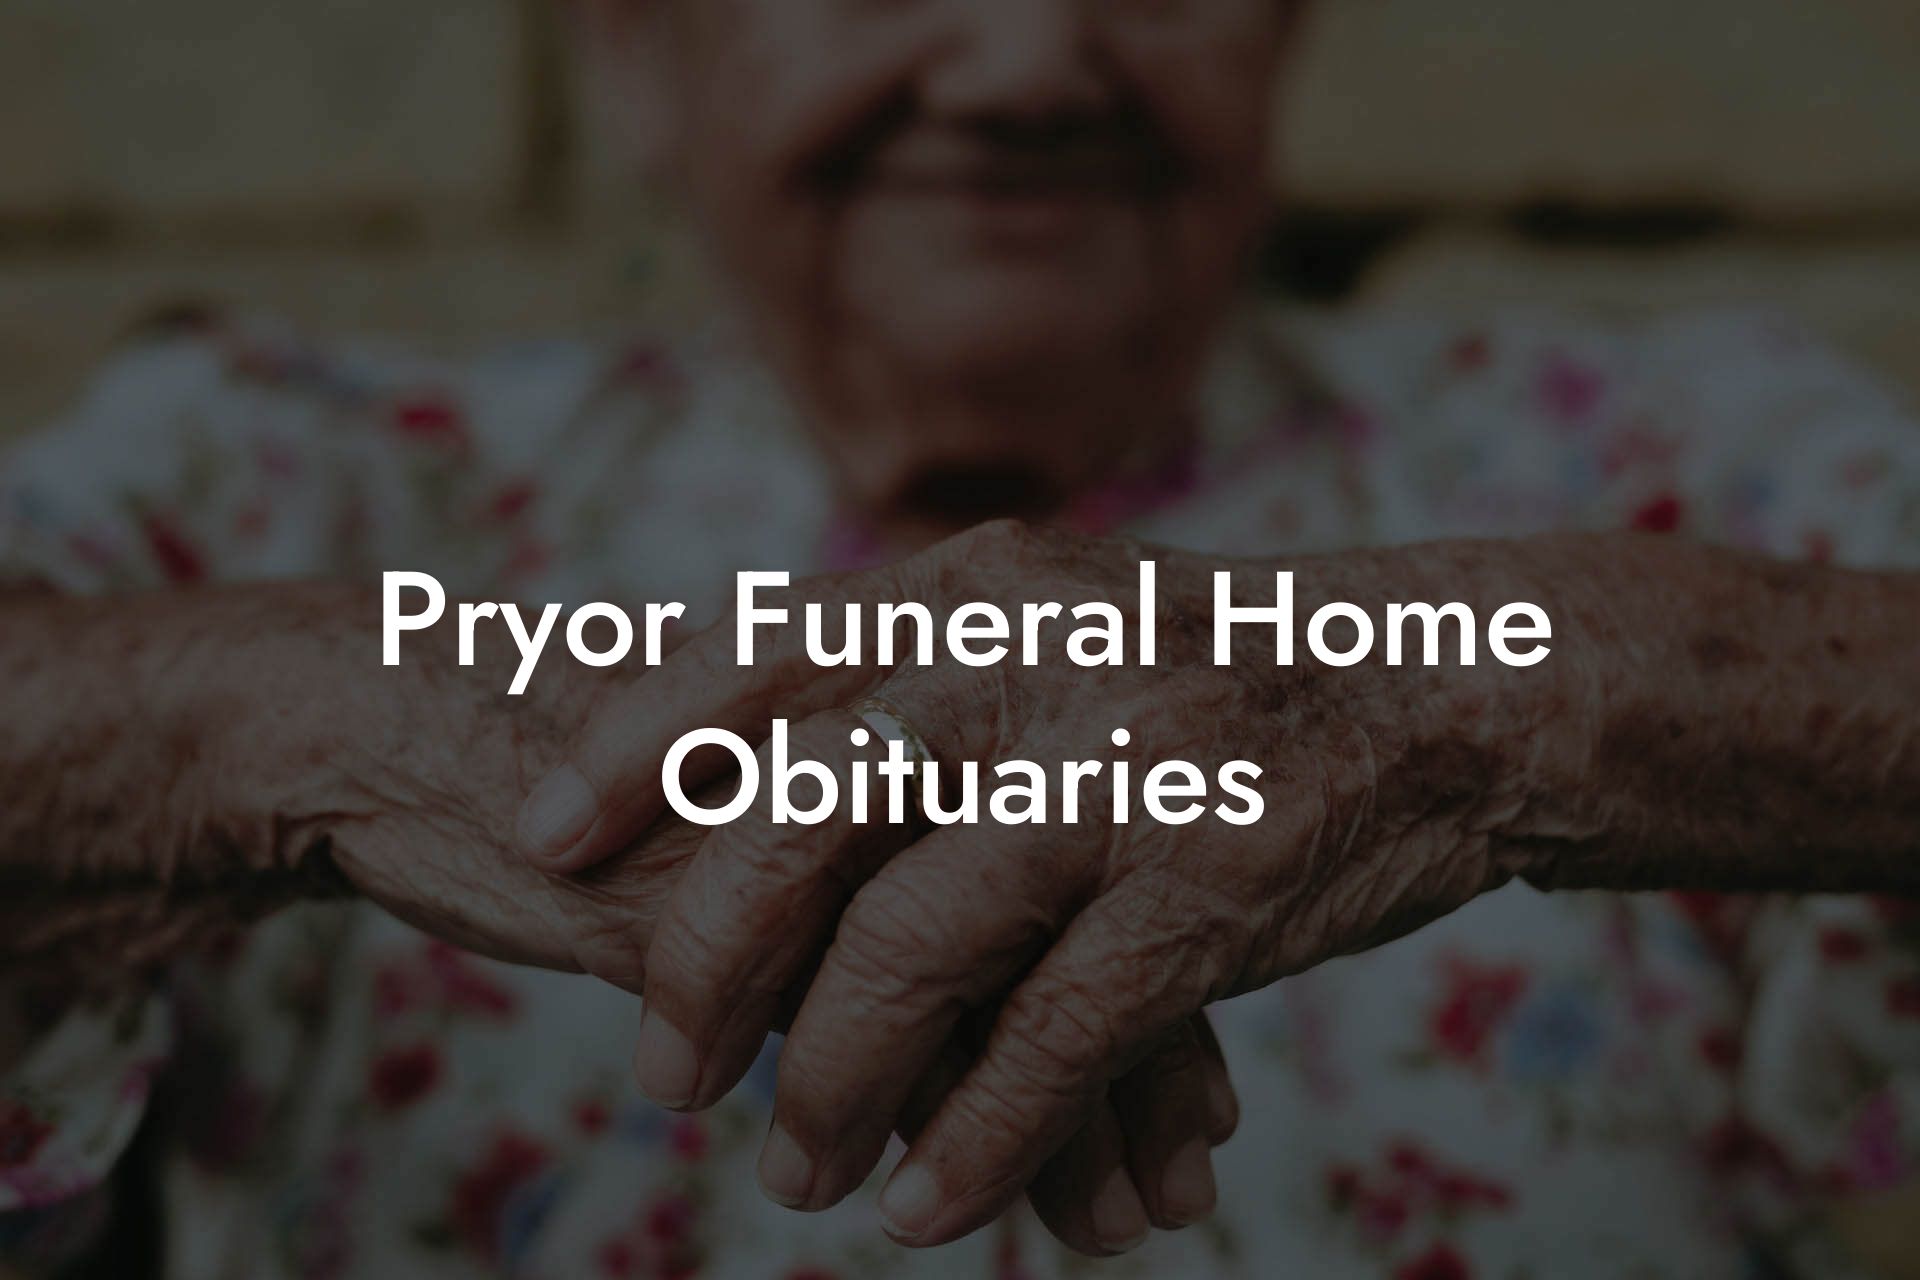 Pryor Funeral Home Obituaries